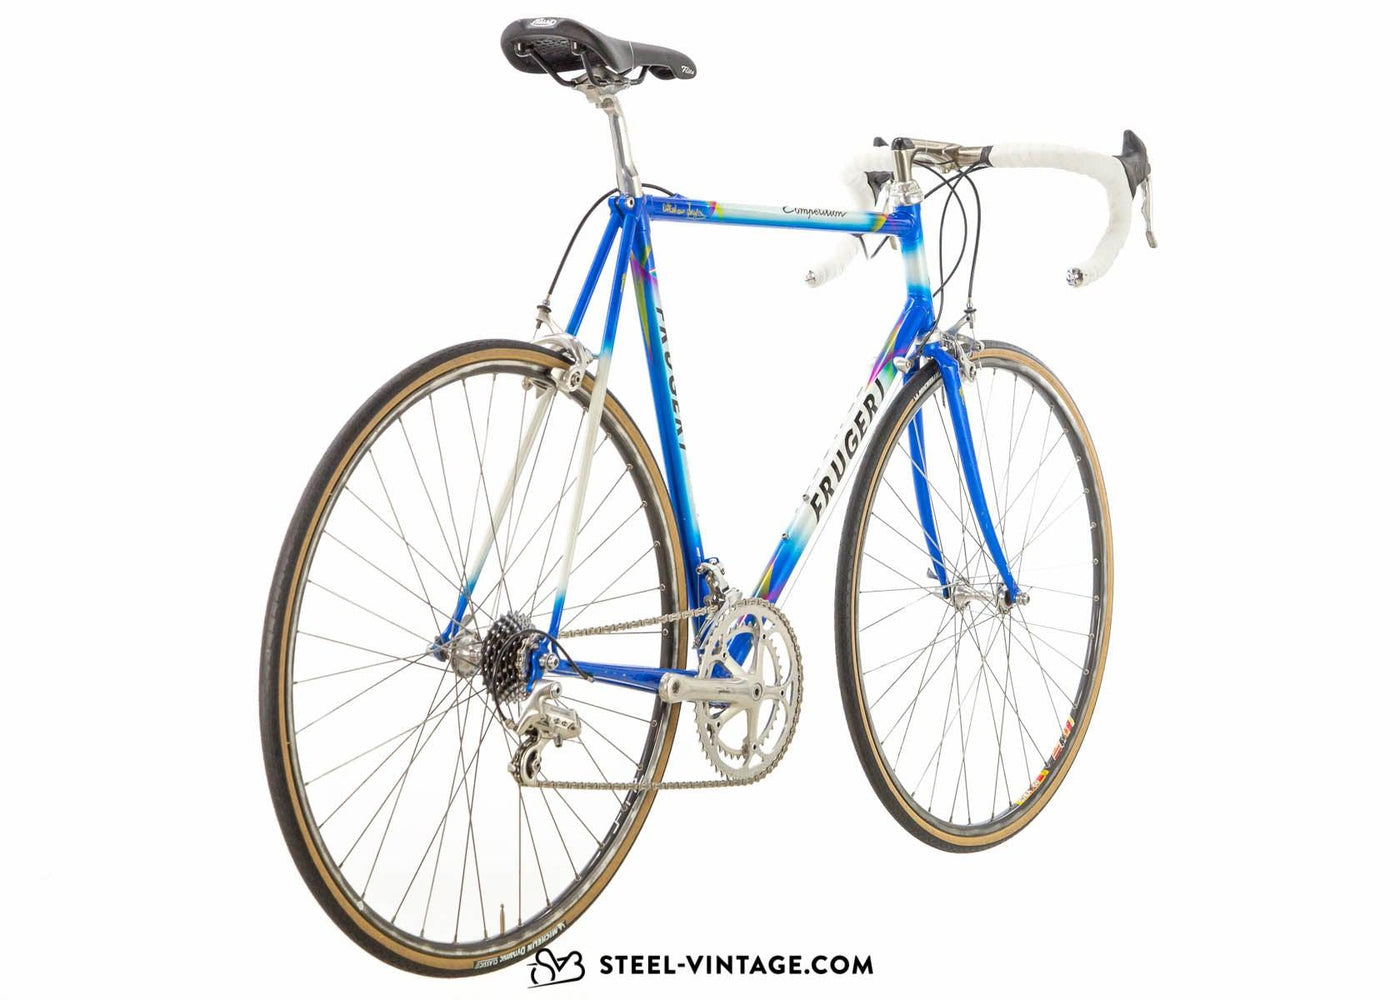 Frugeri Competition Classic Road Bike 1990s - Steel Vintage Bikes